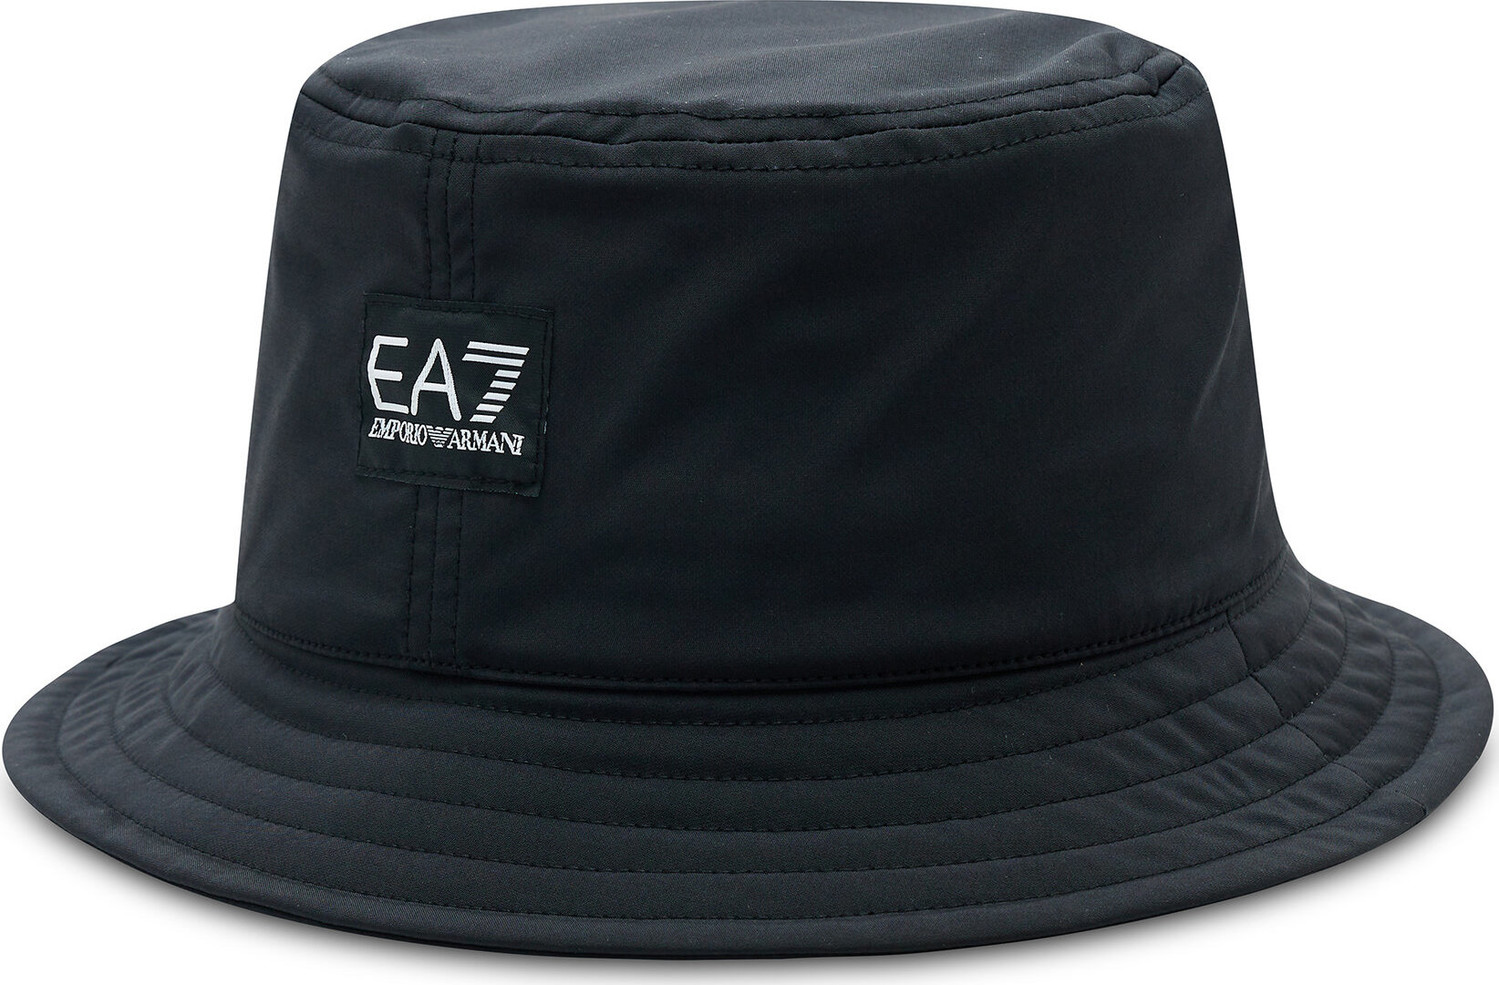 Klobouk bucket hat EA7 Emporio Armani 244700 3R100 00020 Black